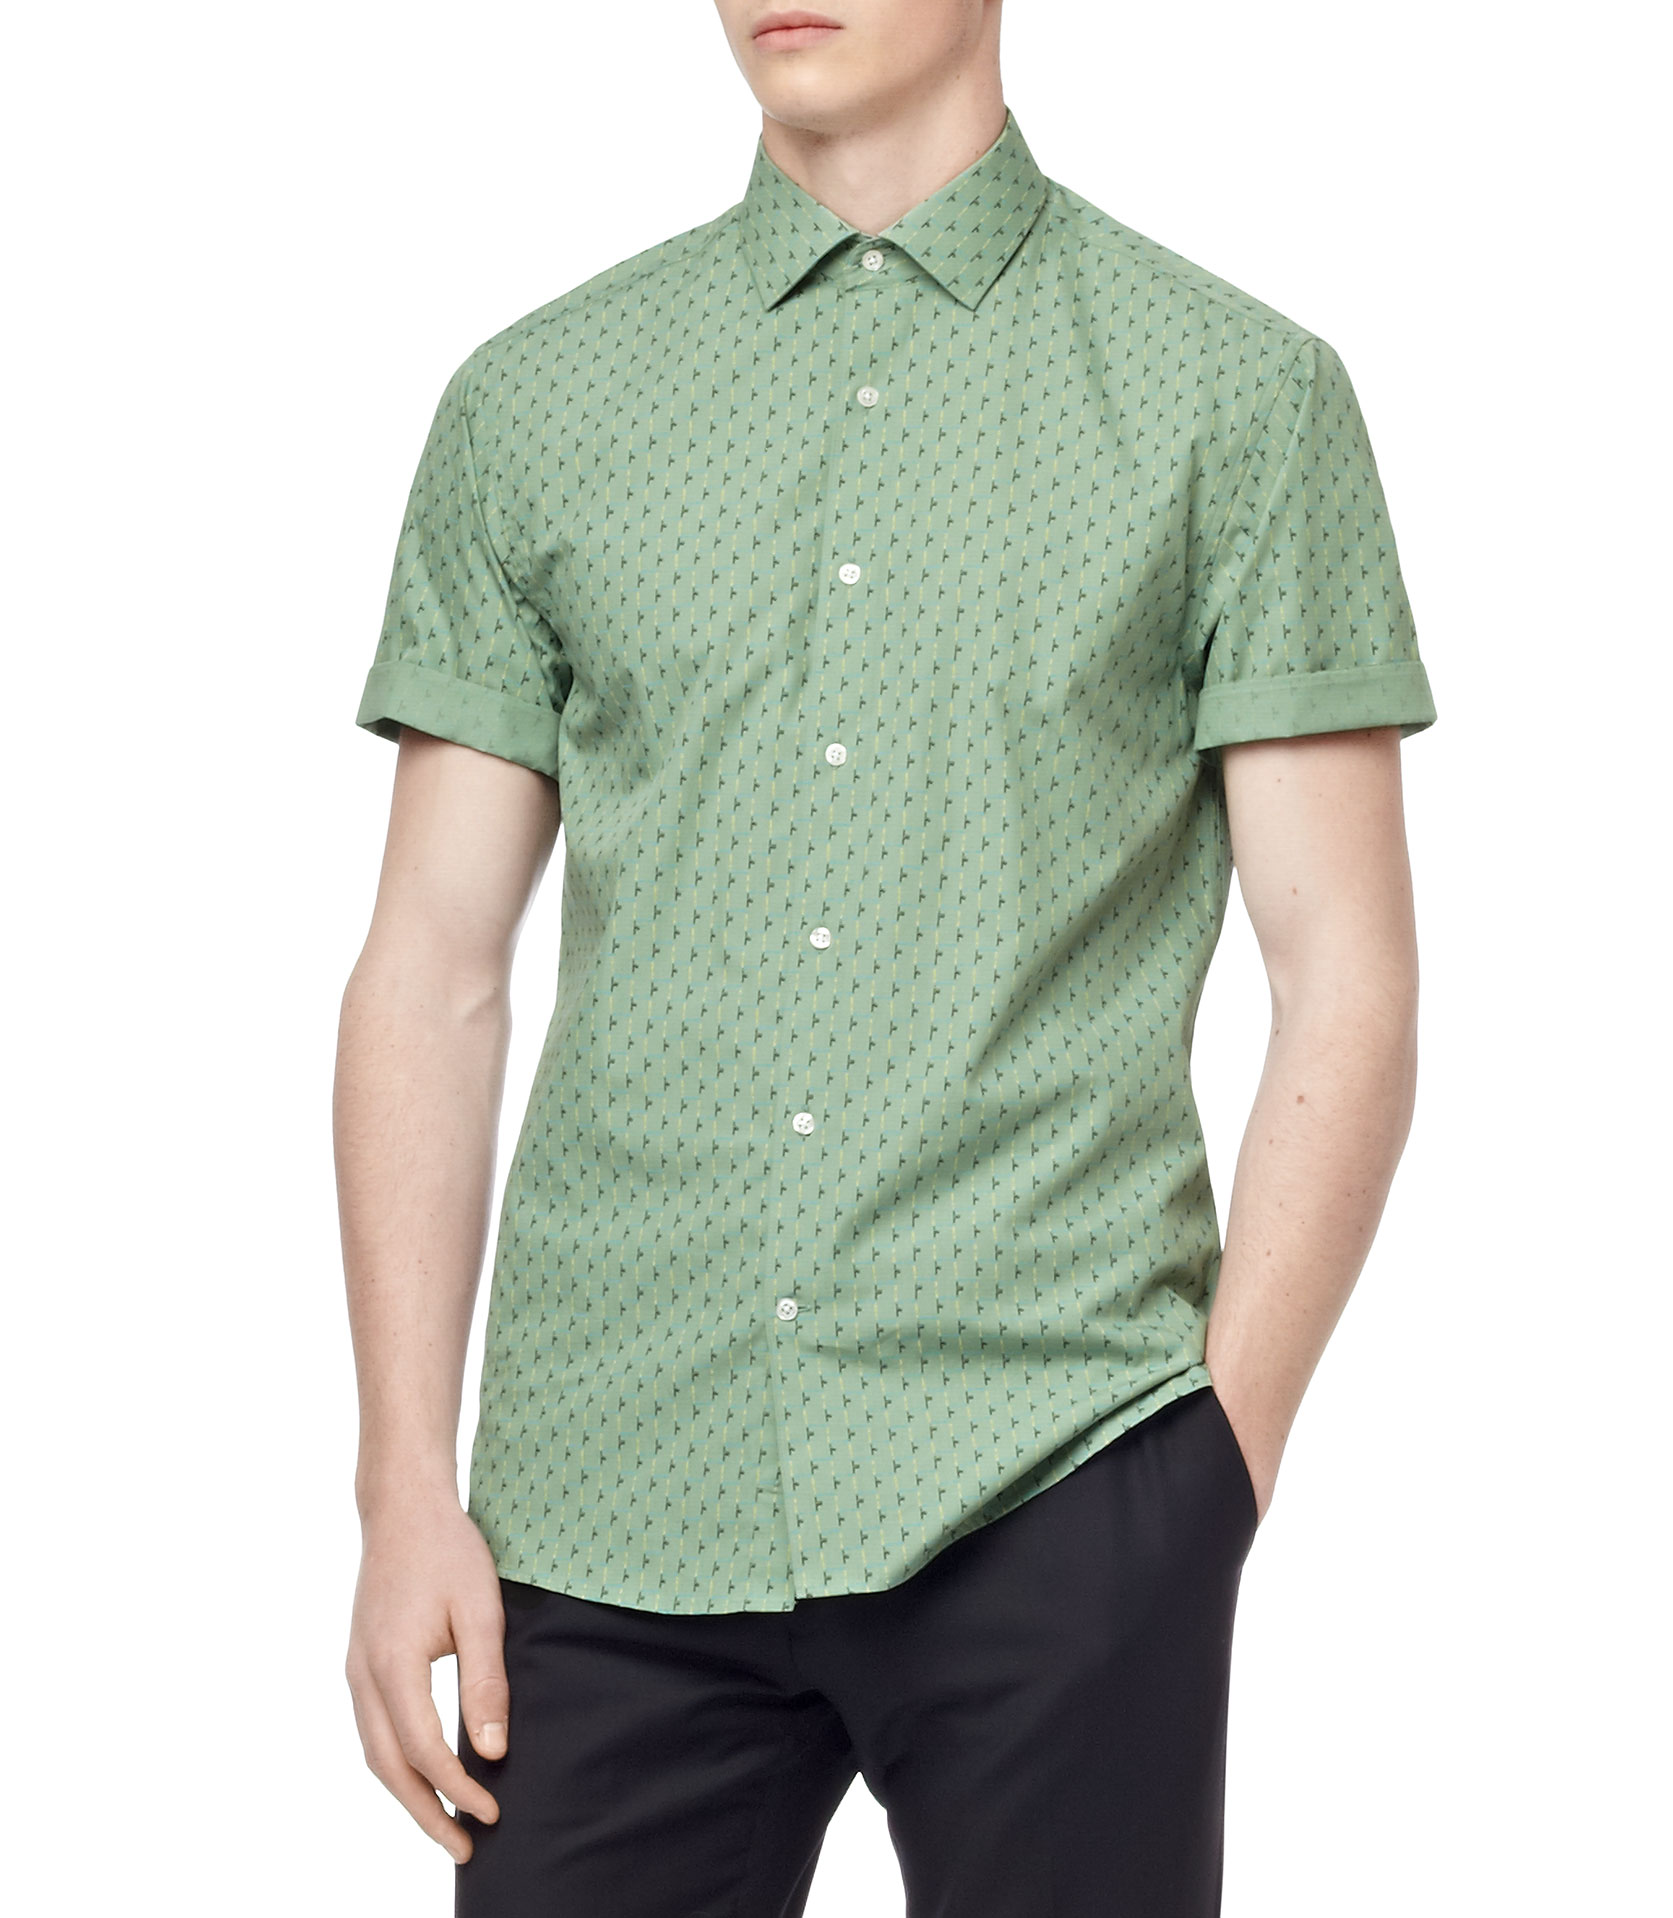 Lyst - Reiss Ocean Vertical Diamond Print Shirt in Green for Men